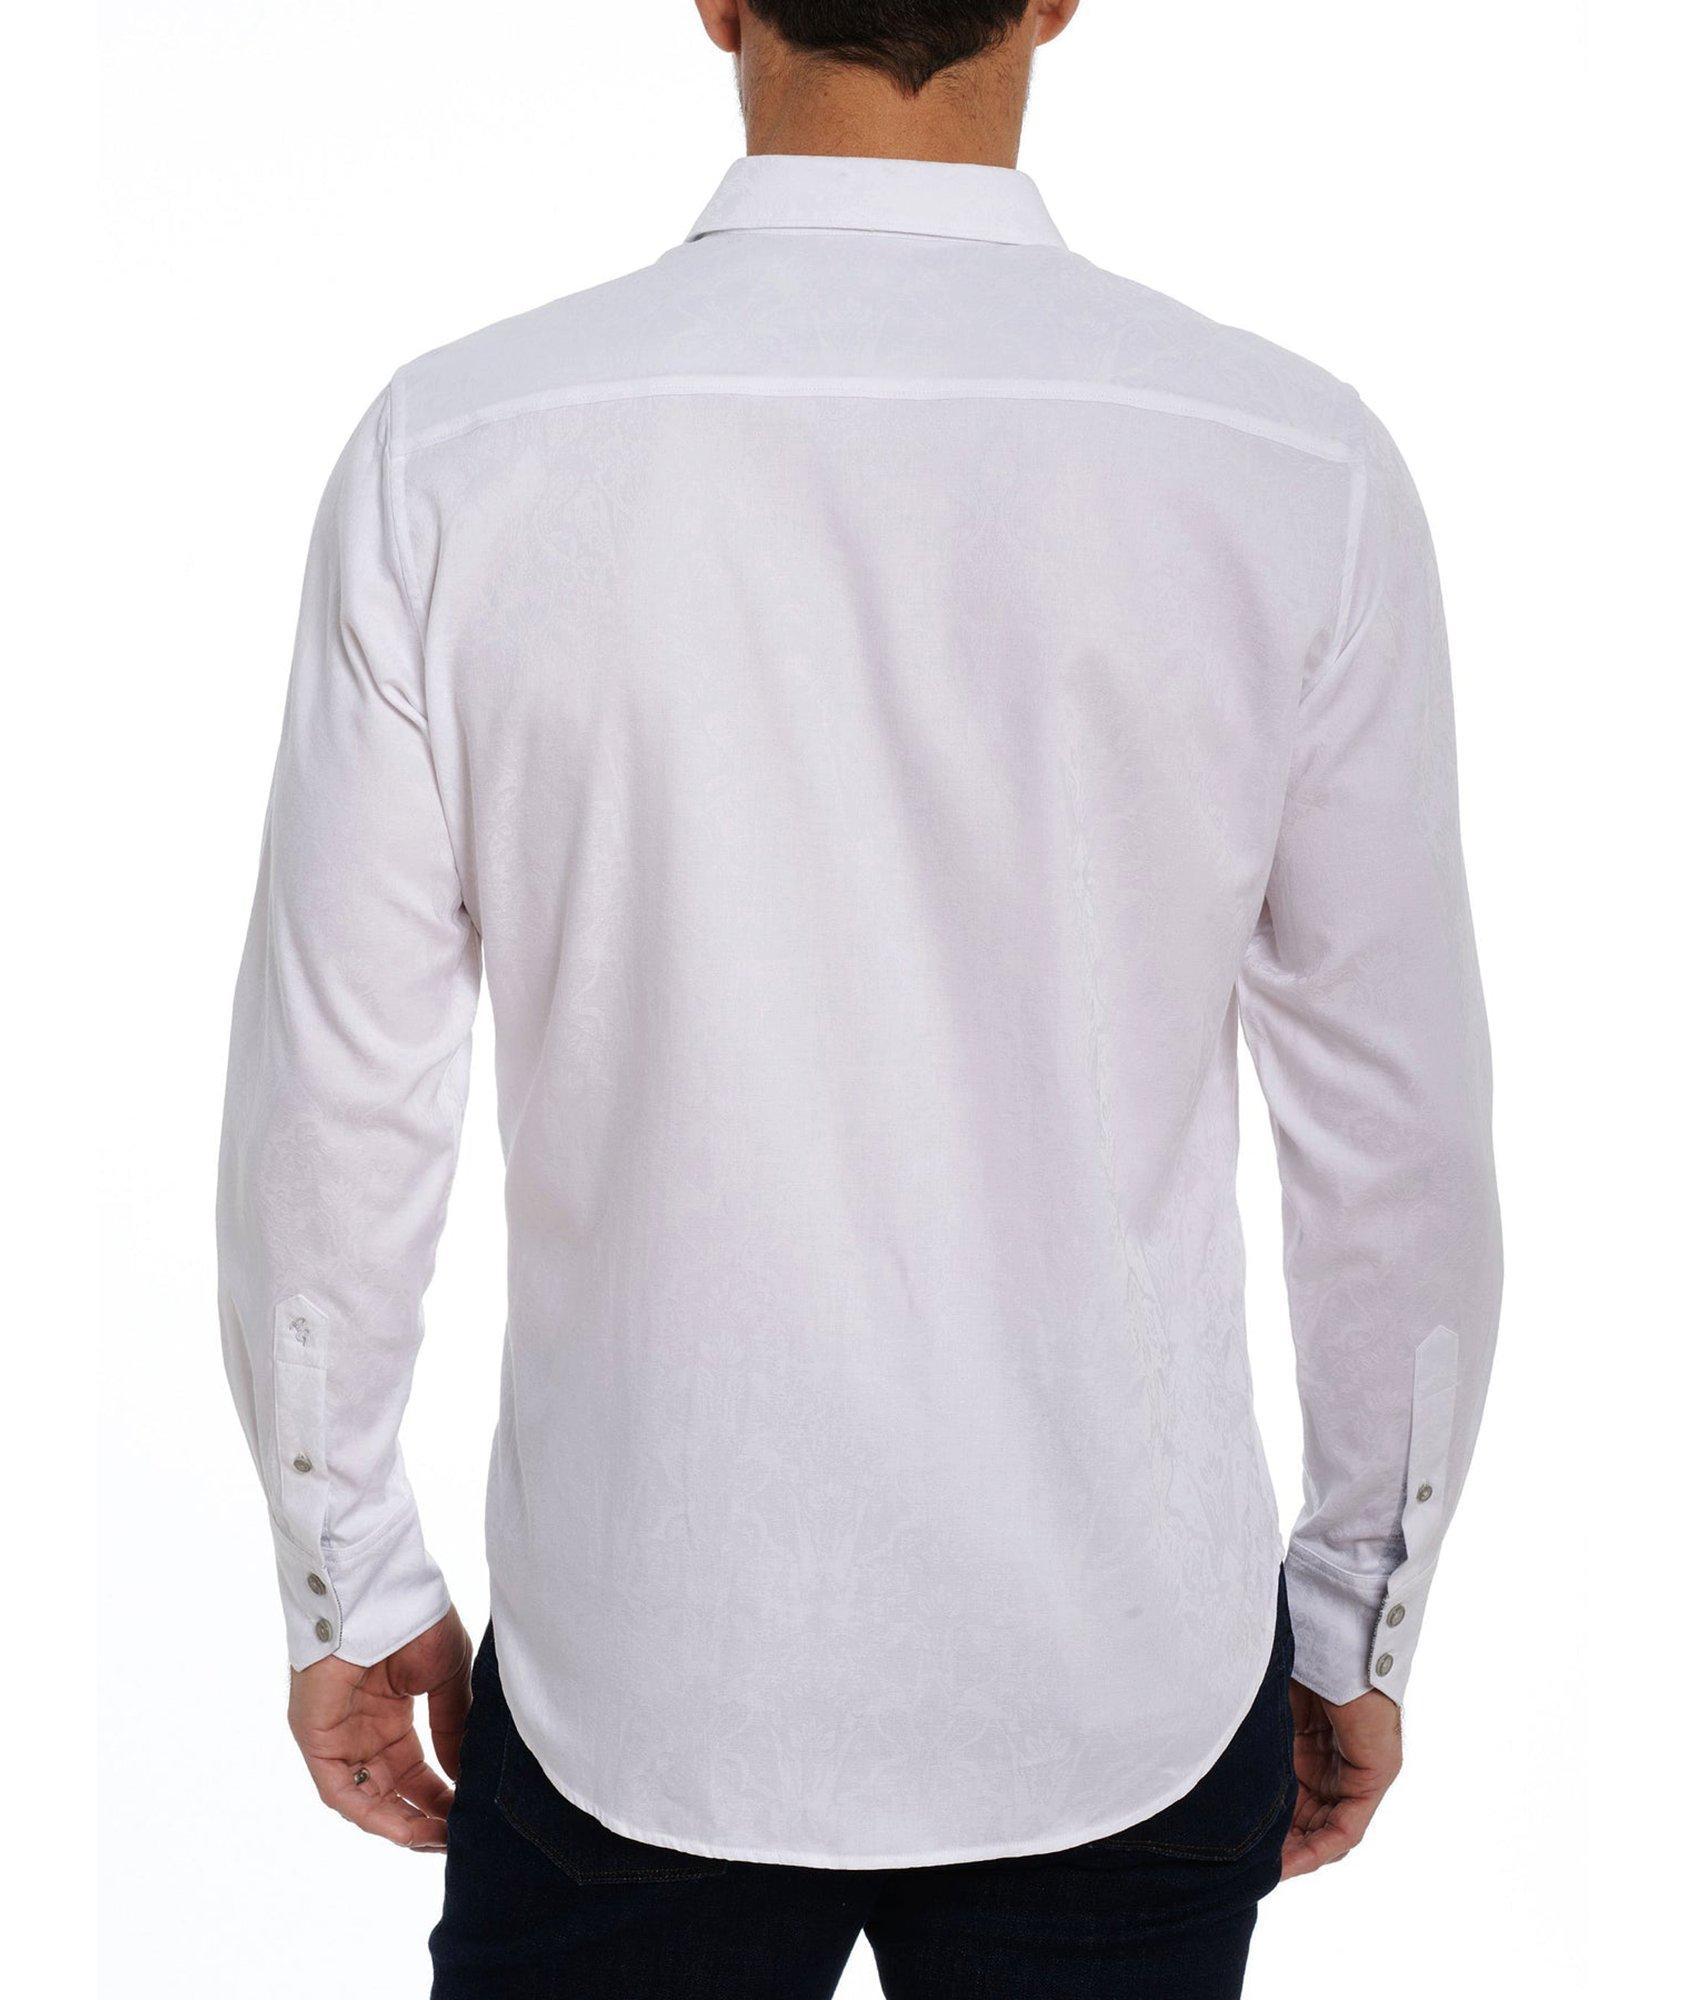 Highland Long Sleeve Classic Fit Shirt image 2